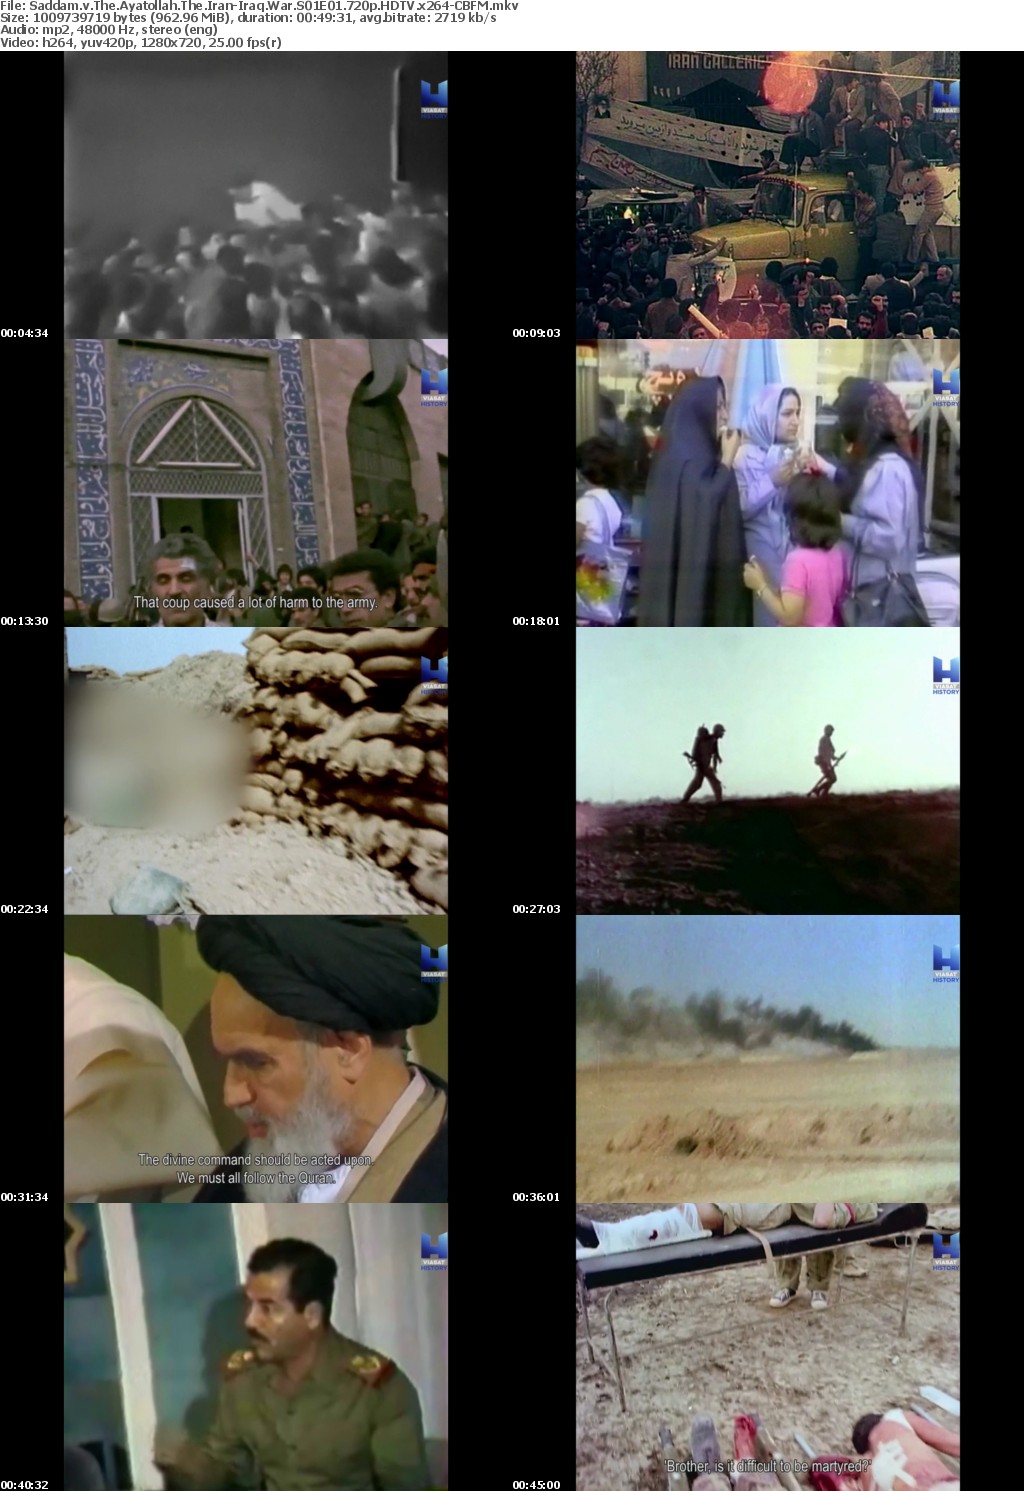 Saddam v The Ayatollah The Iran-Iraq War S01E01 720p HDTV x264-CBFM